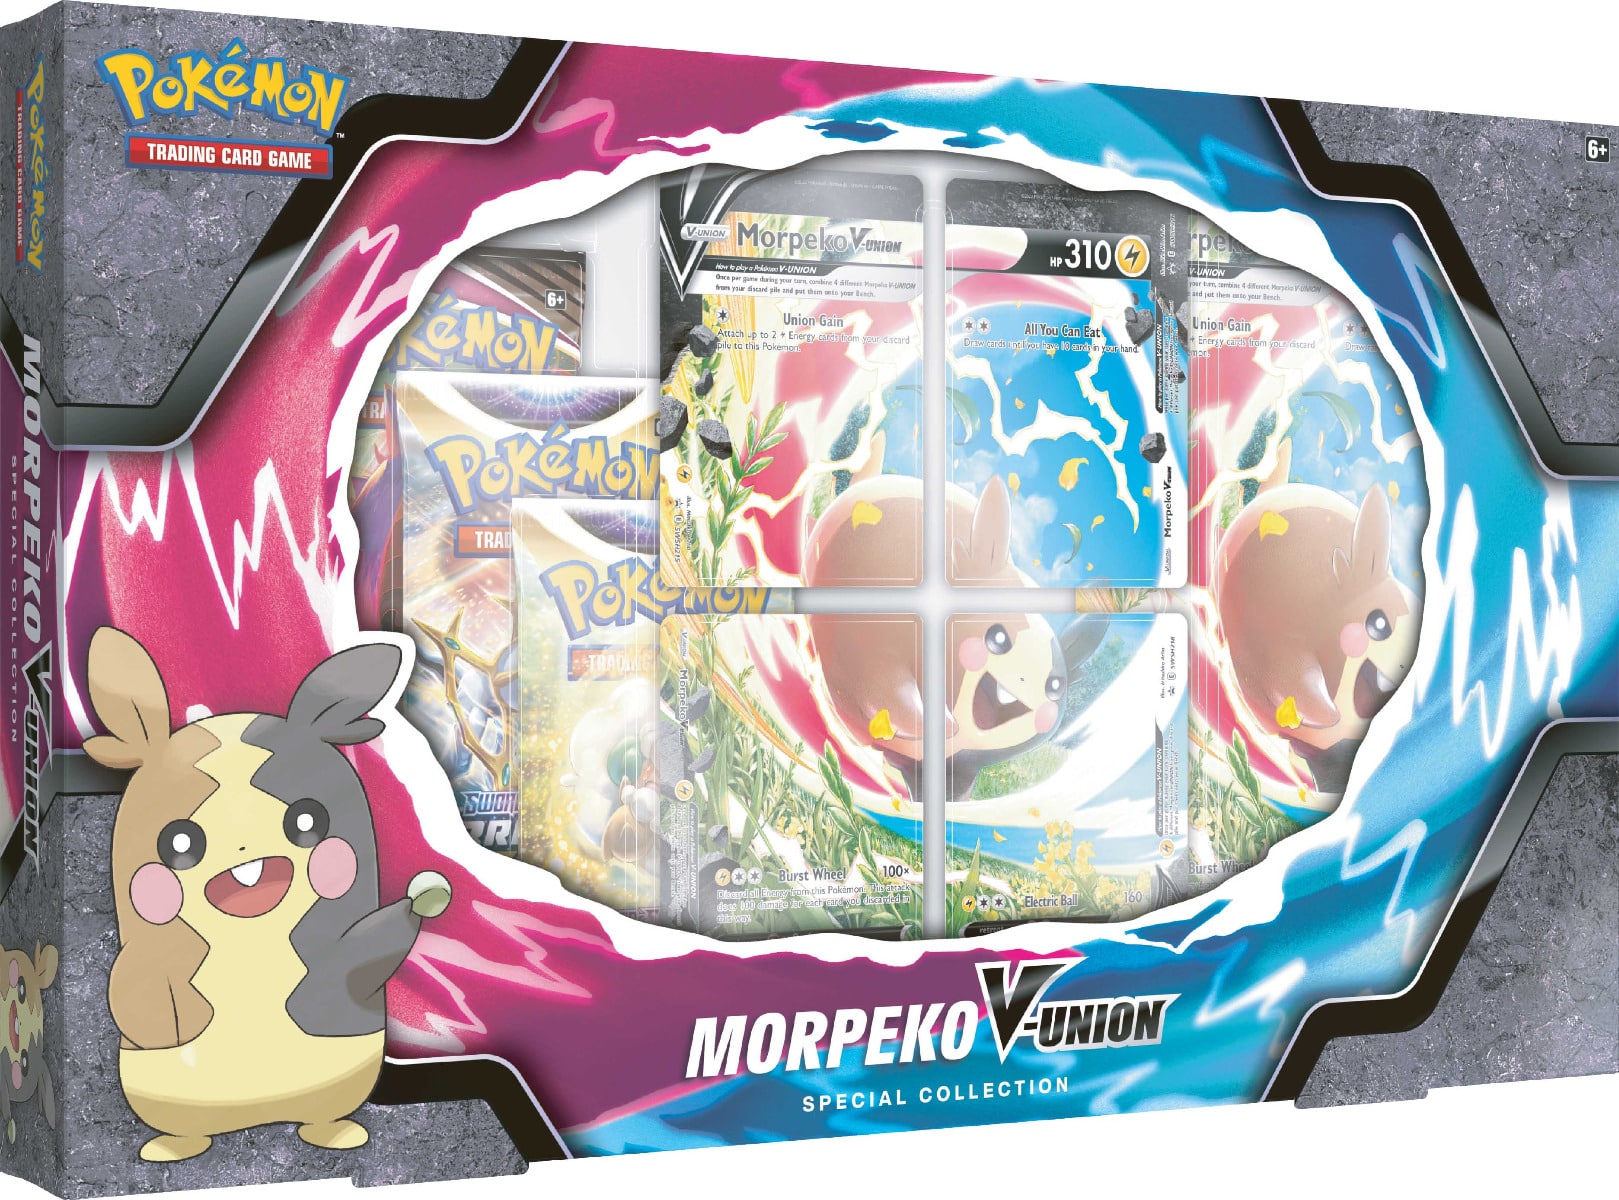 Pokémon Special Collection Morpeko V-Union keräilykortti – lahjapakkaus